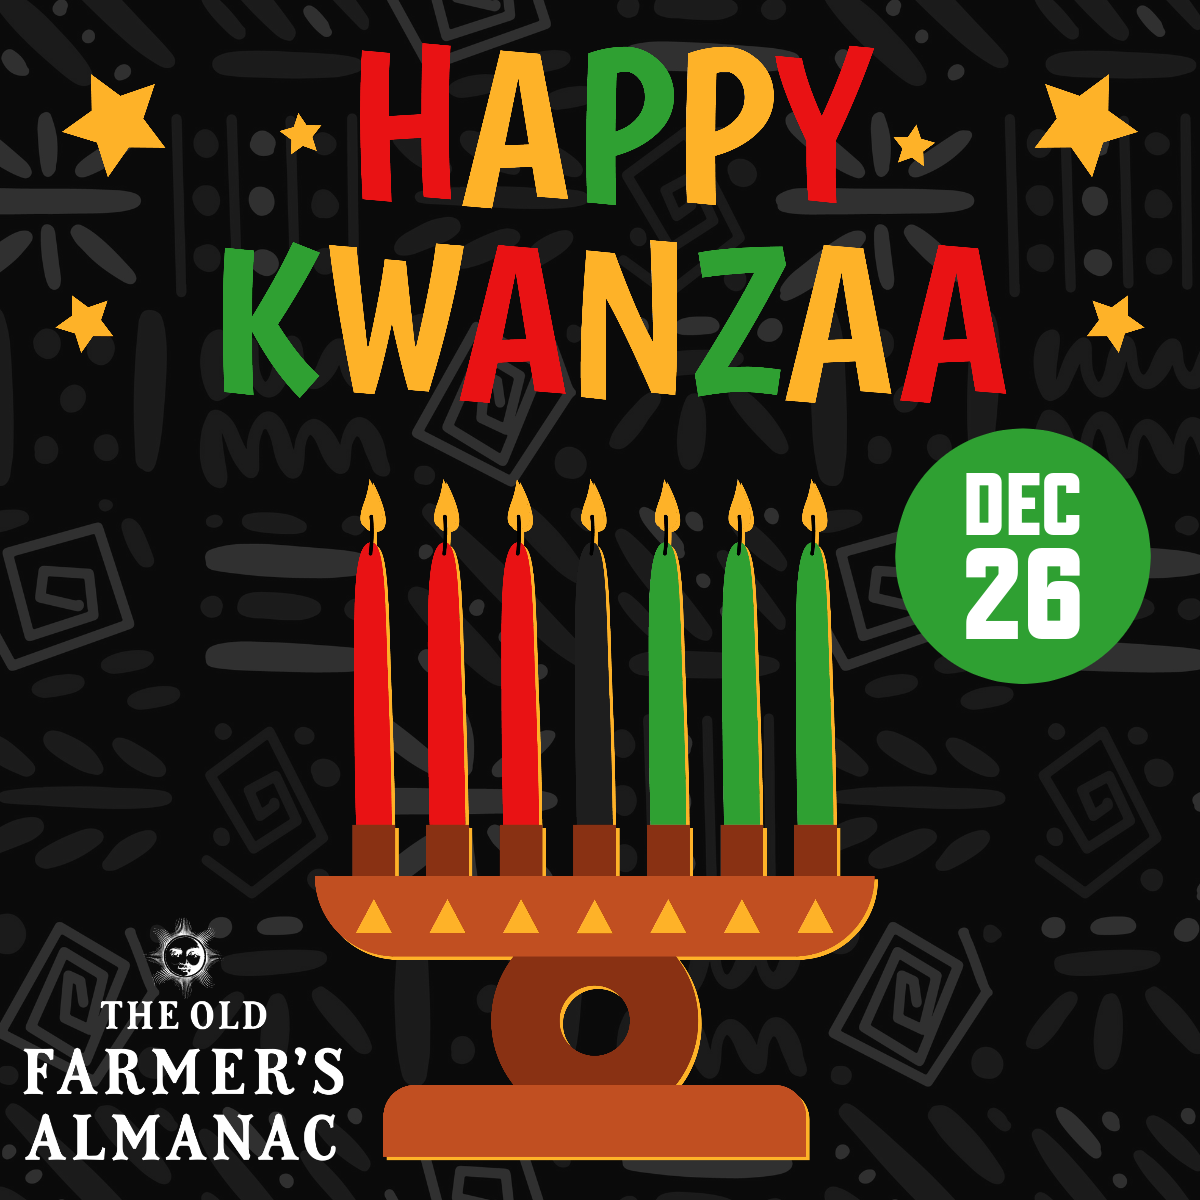 Happy Kwanzaa from The Old Farmers Almanac, December 26